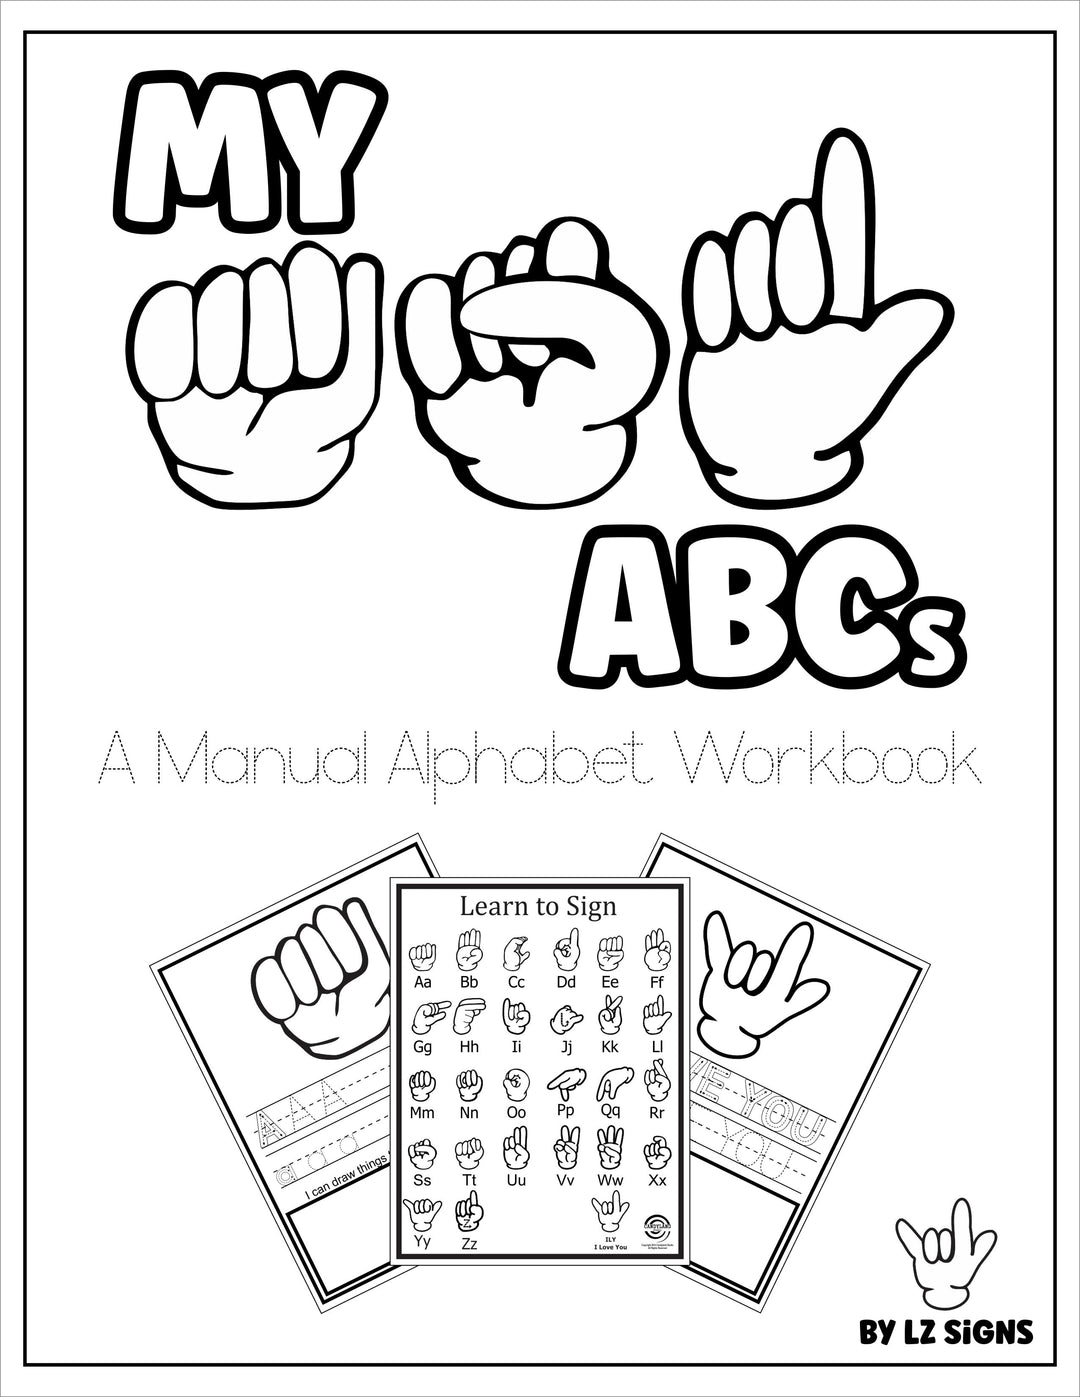 My ASL ABCs - A Manual Alphabet Workbook DIGITAL DOWNLOAD